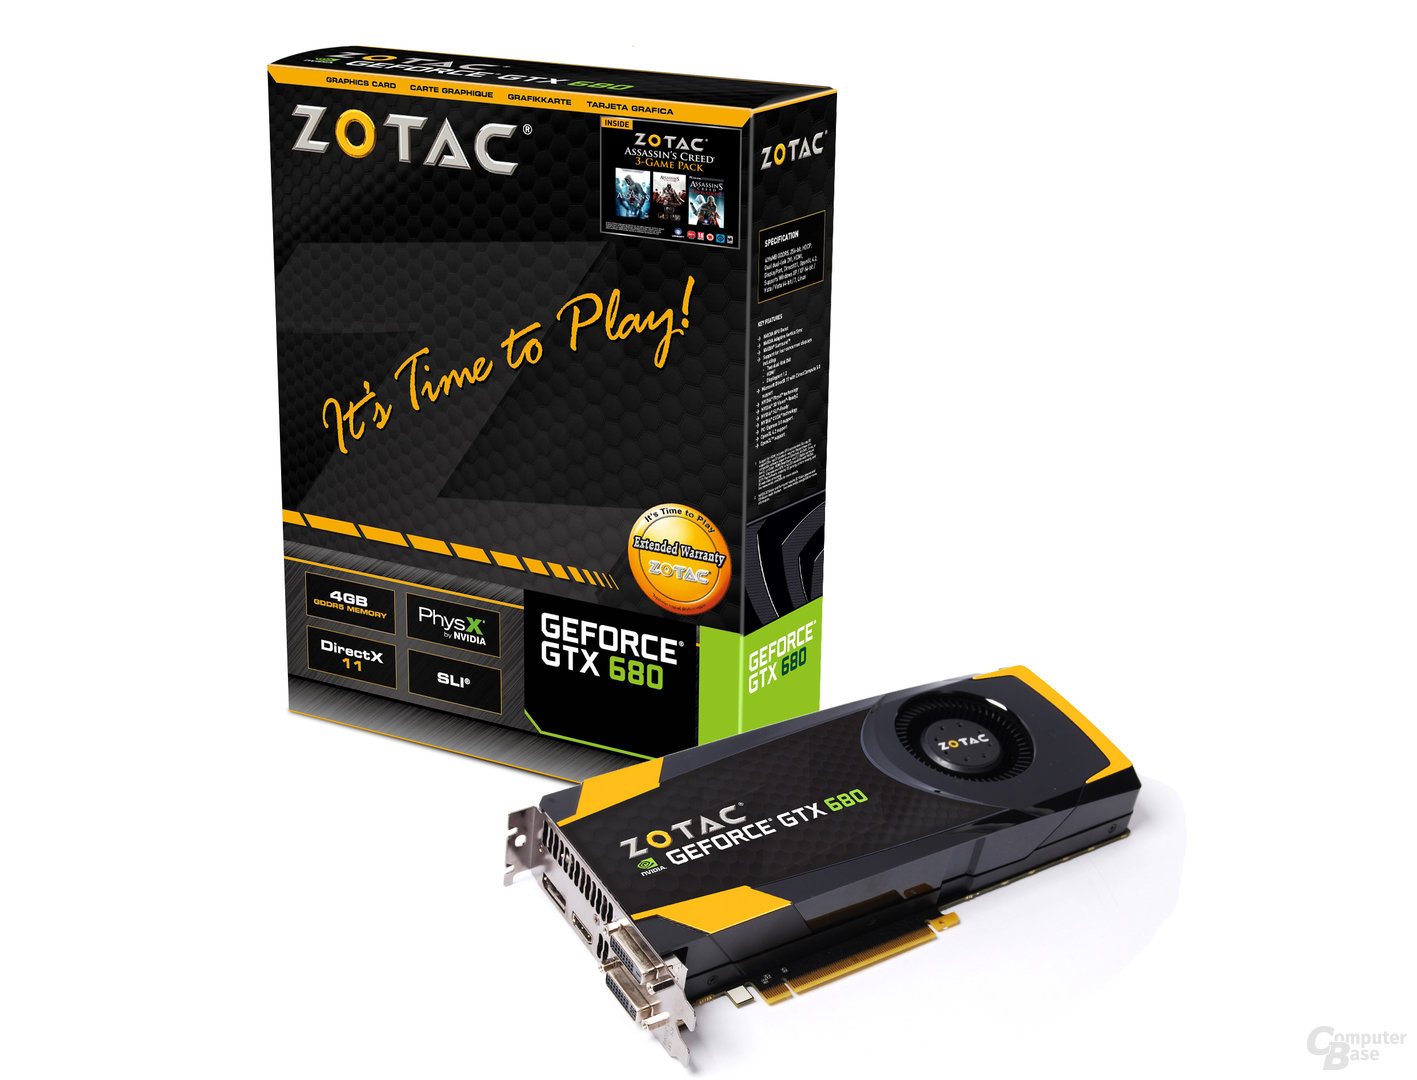 Zotac GeForce GTX 680 4 GByte